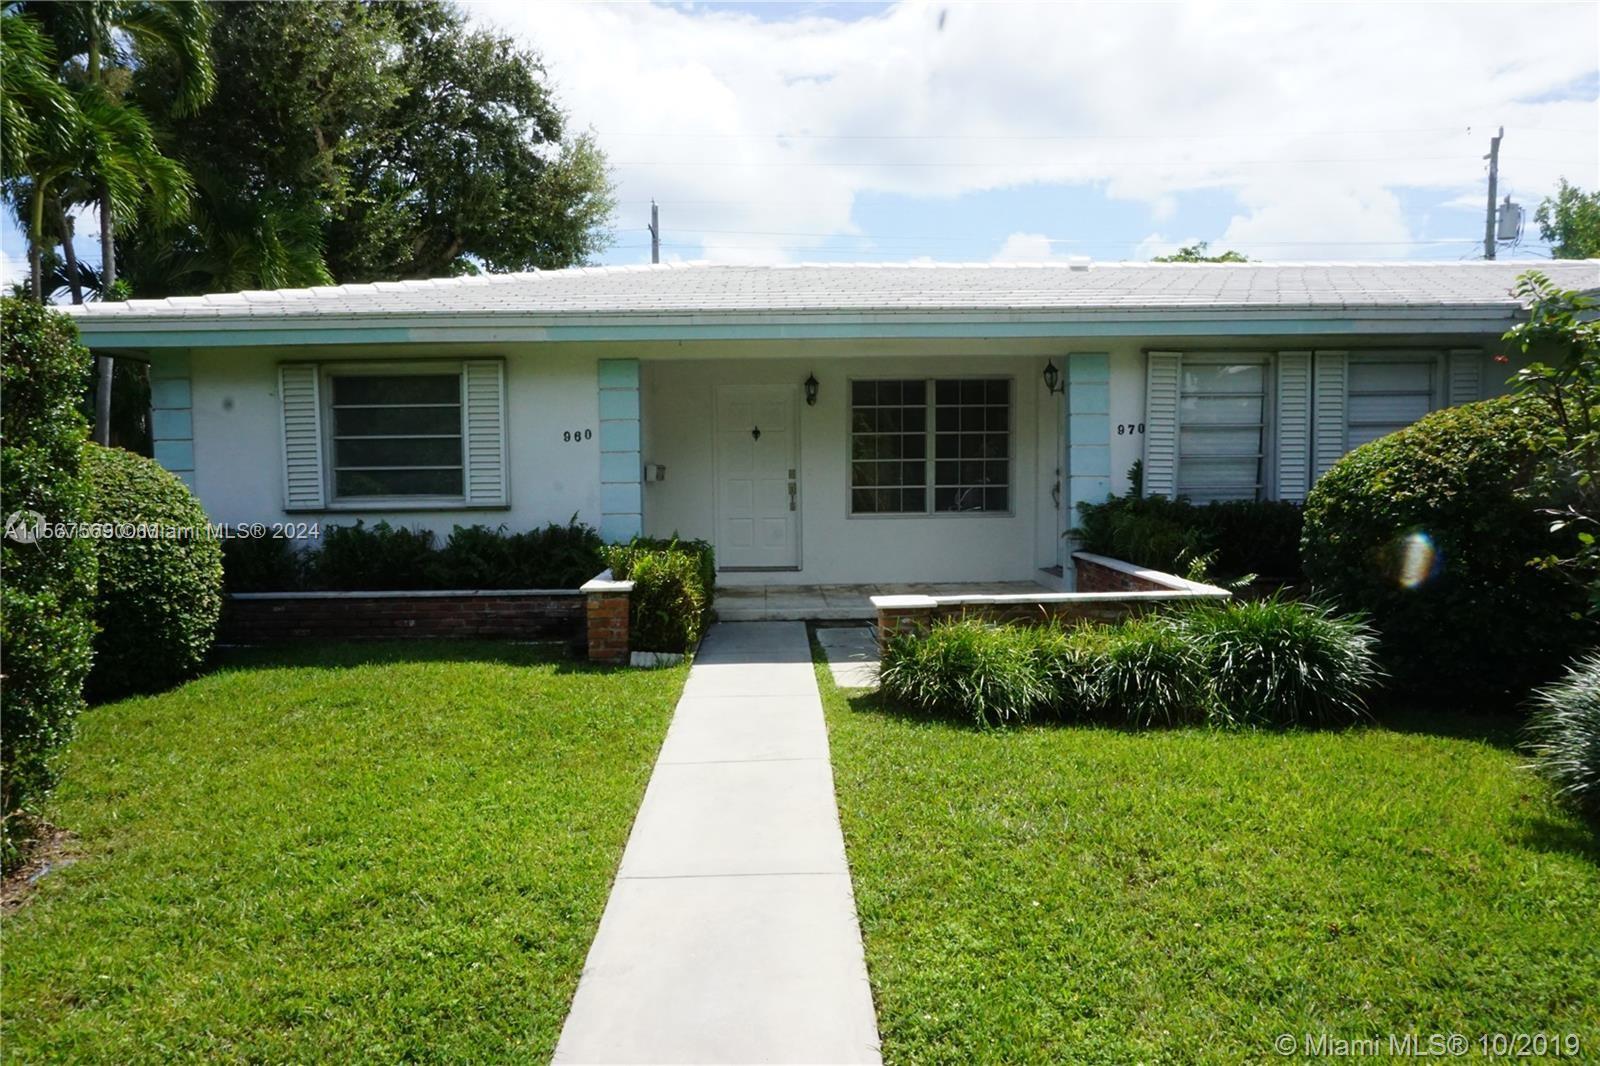 Rental Property at 960 Benevento Ave 960, Coral Gables, Broward County, Florida - Bedrooms: 2 
Bathrooms: 1  - $3,200 MO.